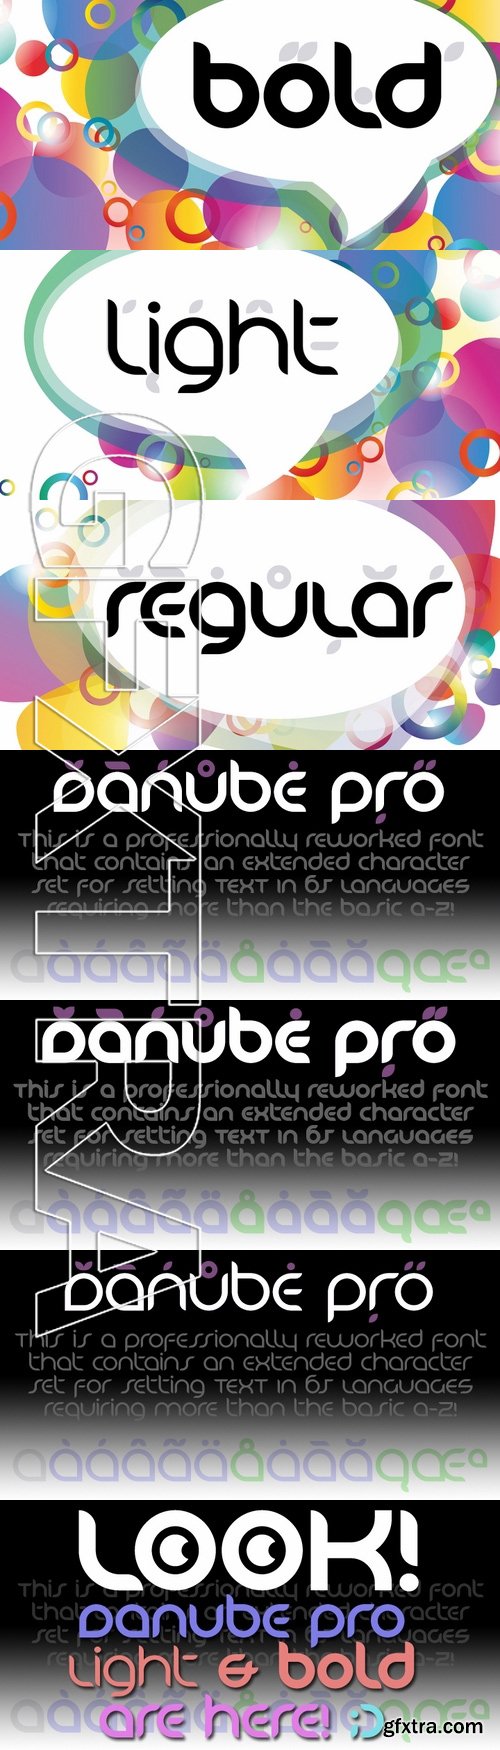 Danube Pro - 3 fonts: $30.00